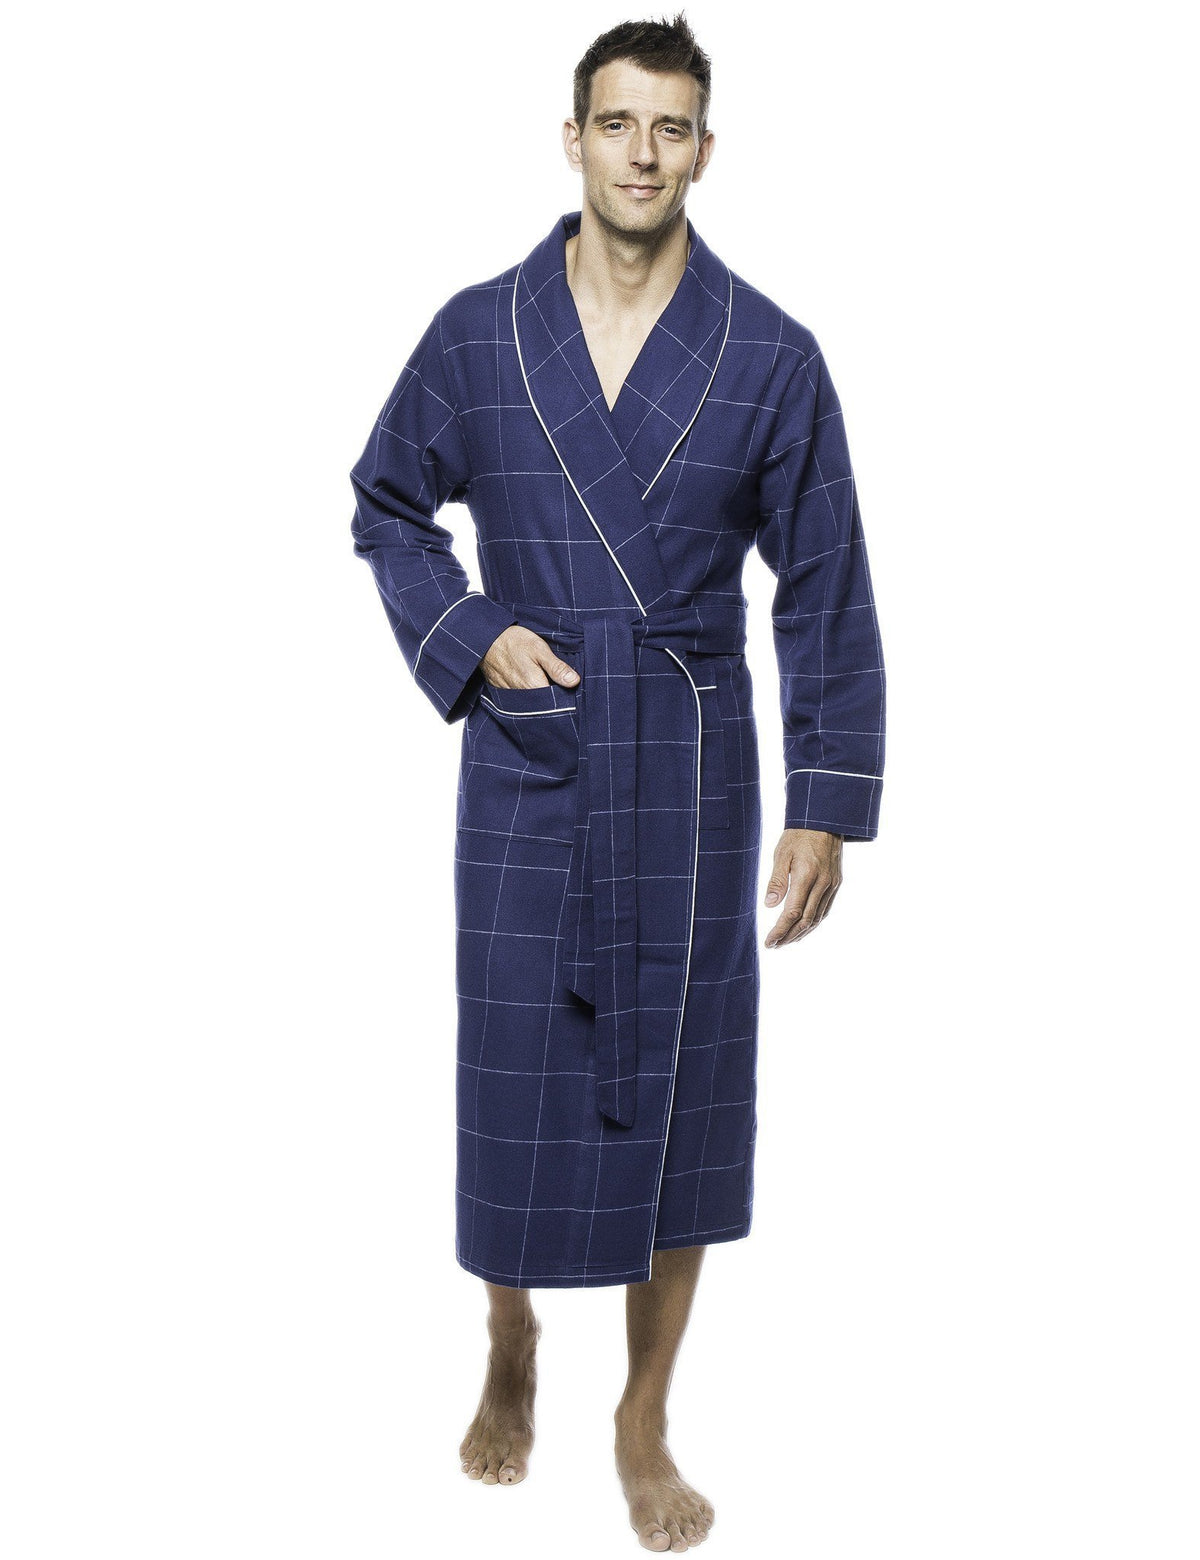 Mens Premium 100% Cotton Flannel Robe - Windowpane Checks Dark Blue